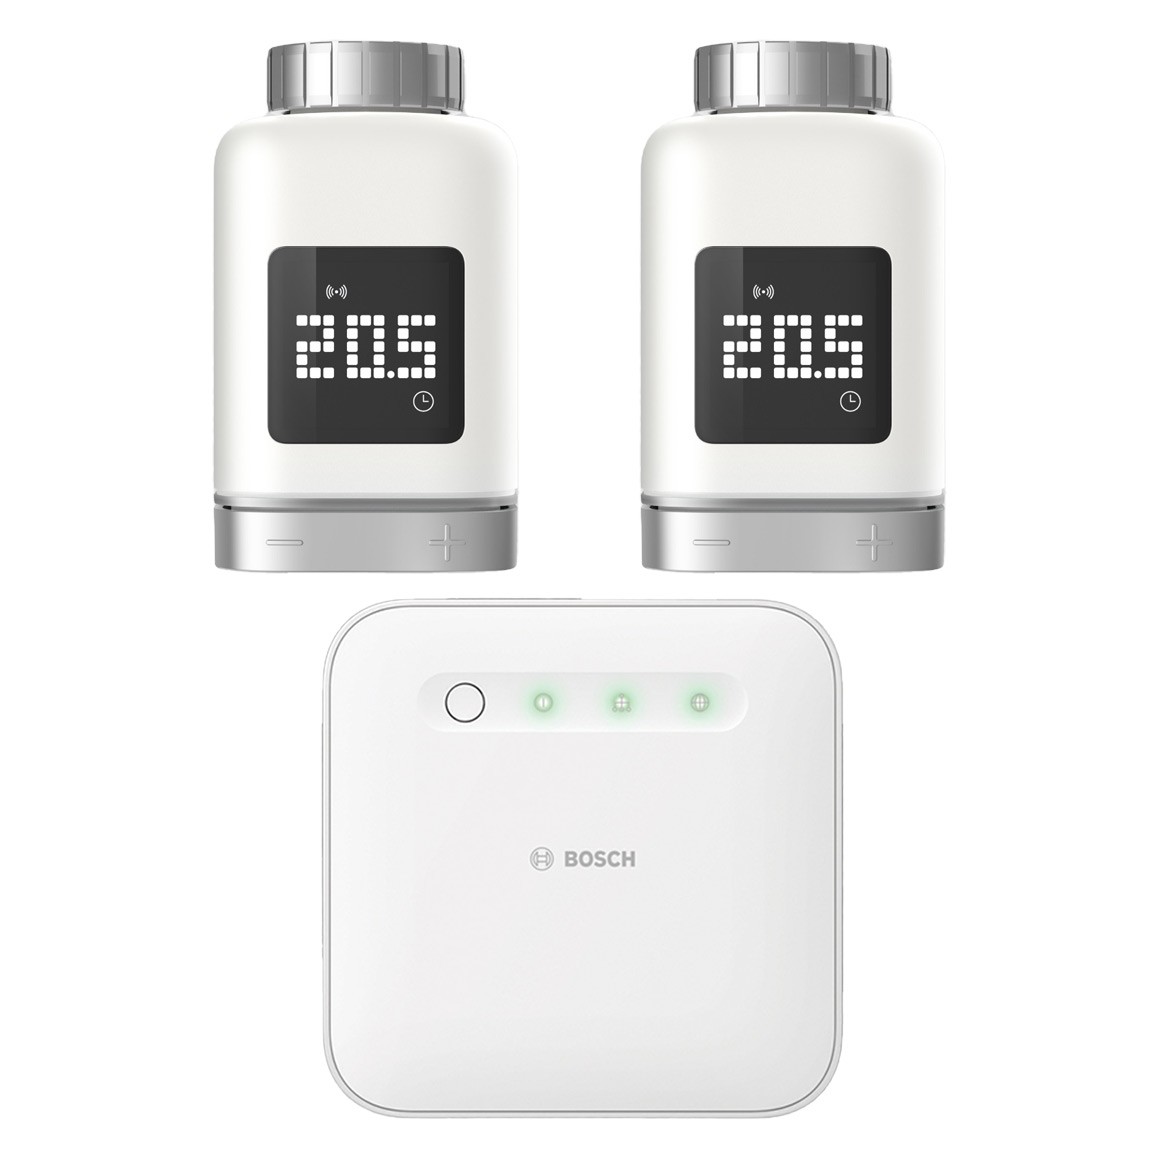 Bosch Smart Home - Starter Set Uppvärmning II med 2 Elementtermostater